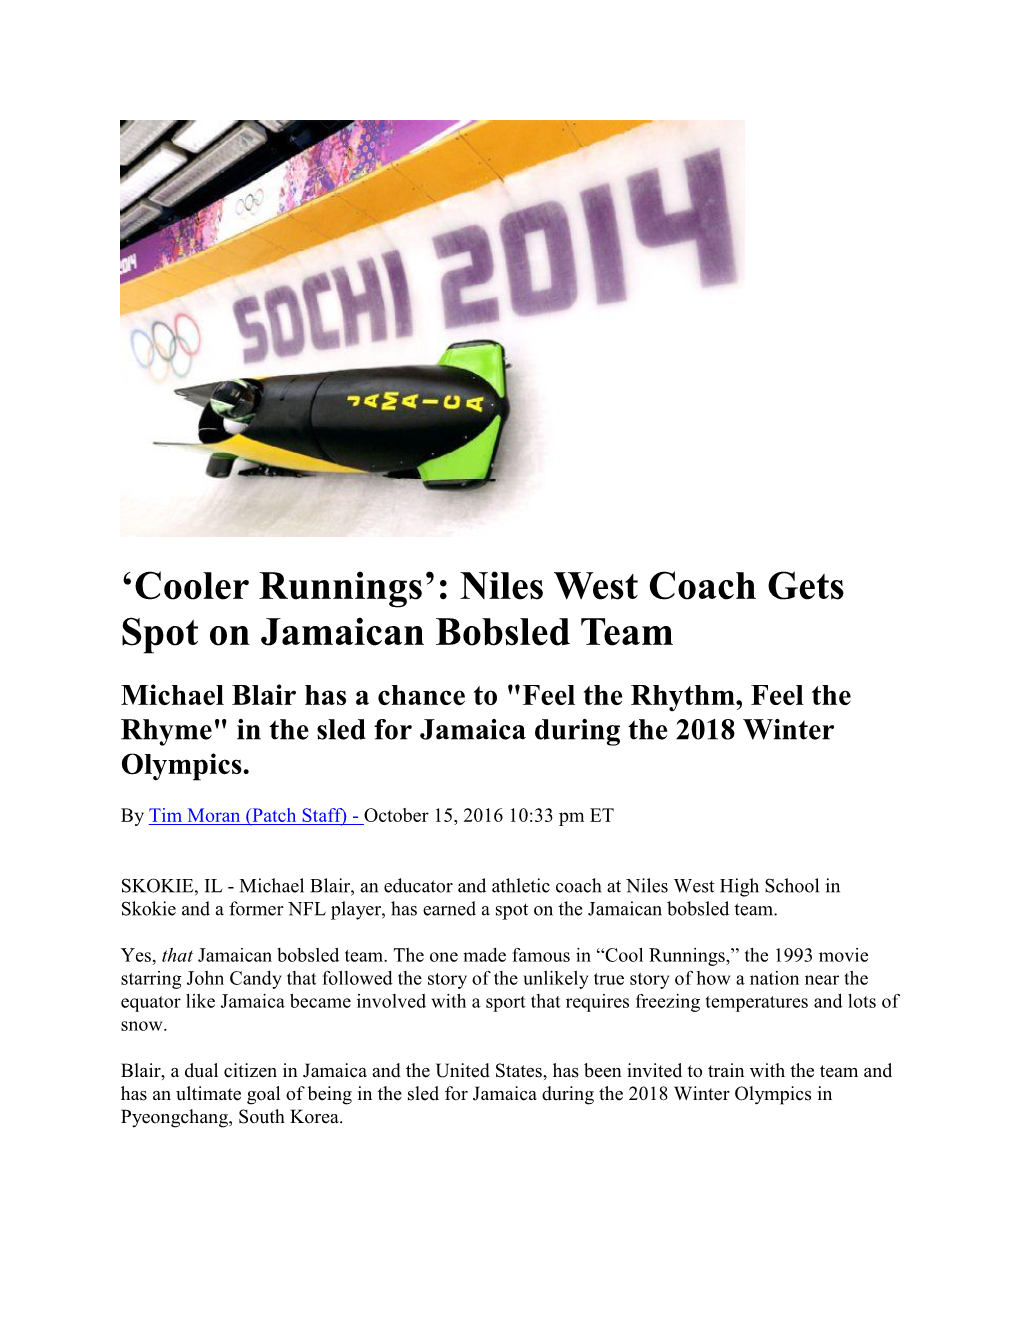 Michael Blair, Niles West Coach Gets Spot on Jamaican Bobsled Team